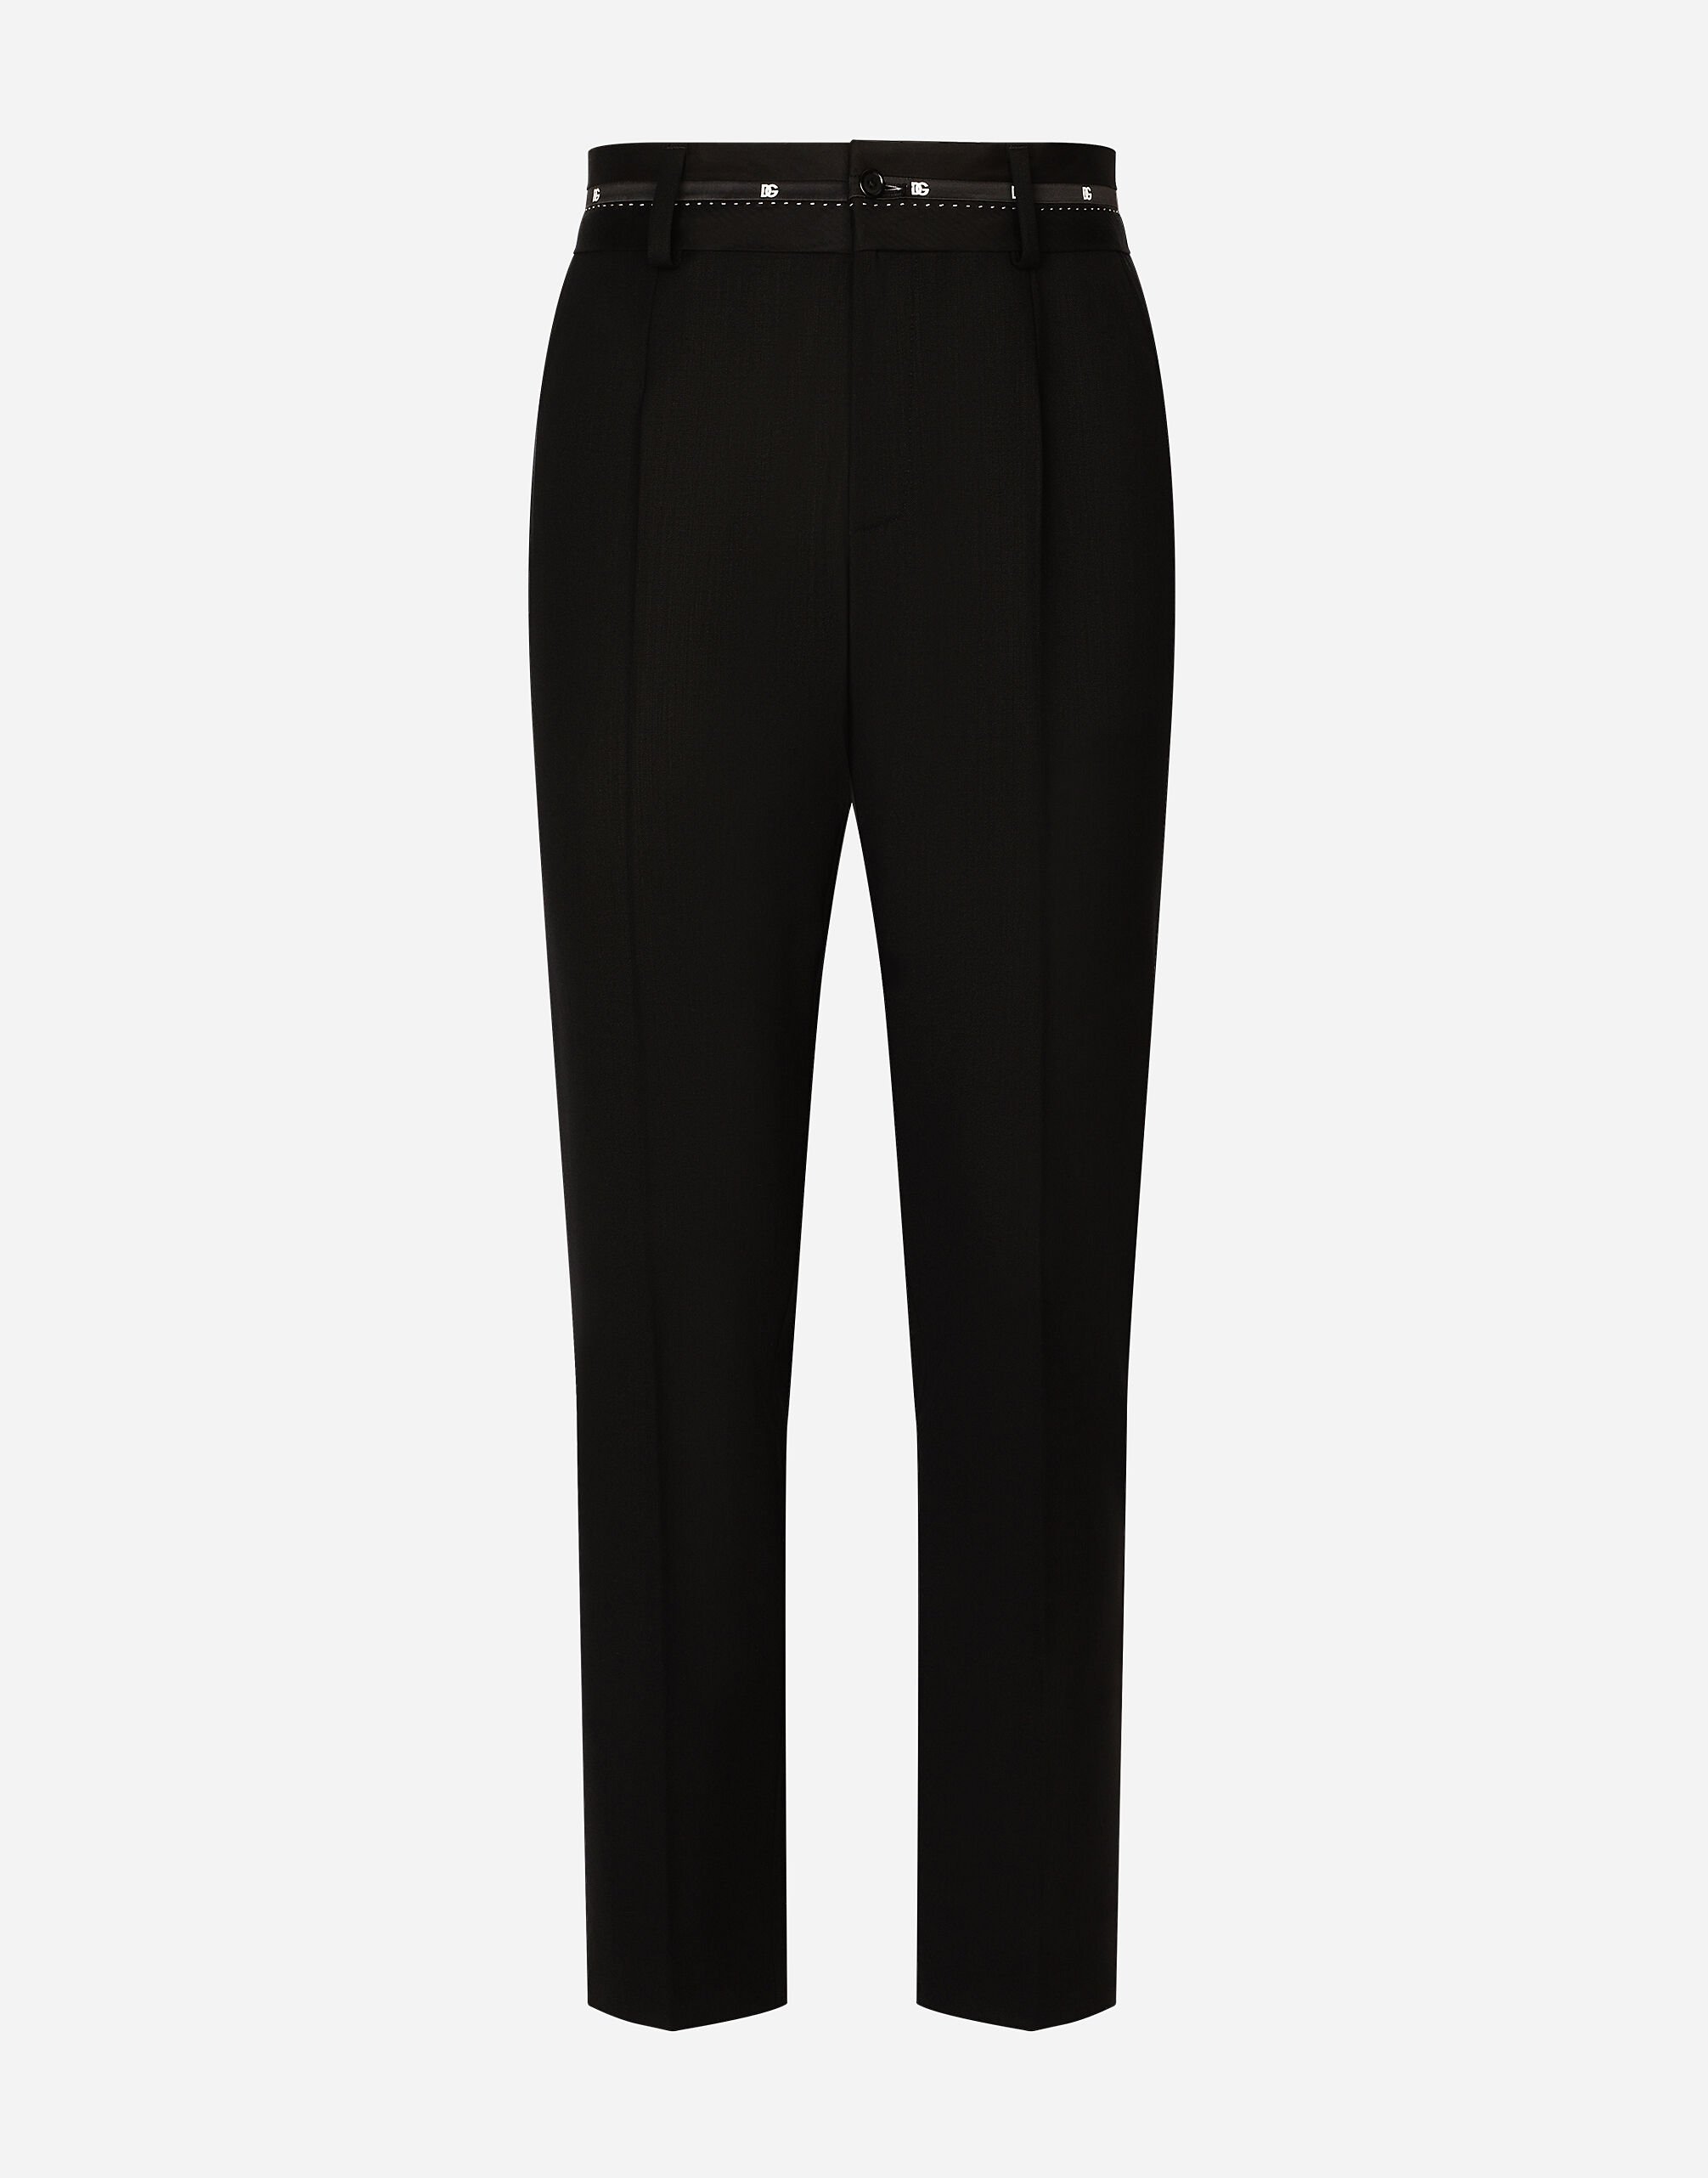 Dolce & Gabbana Stretch wool pants with branded waistband Black G2RR4TFLSIM